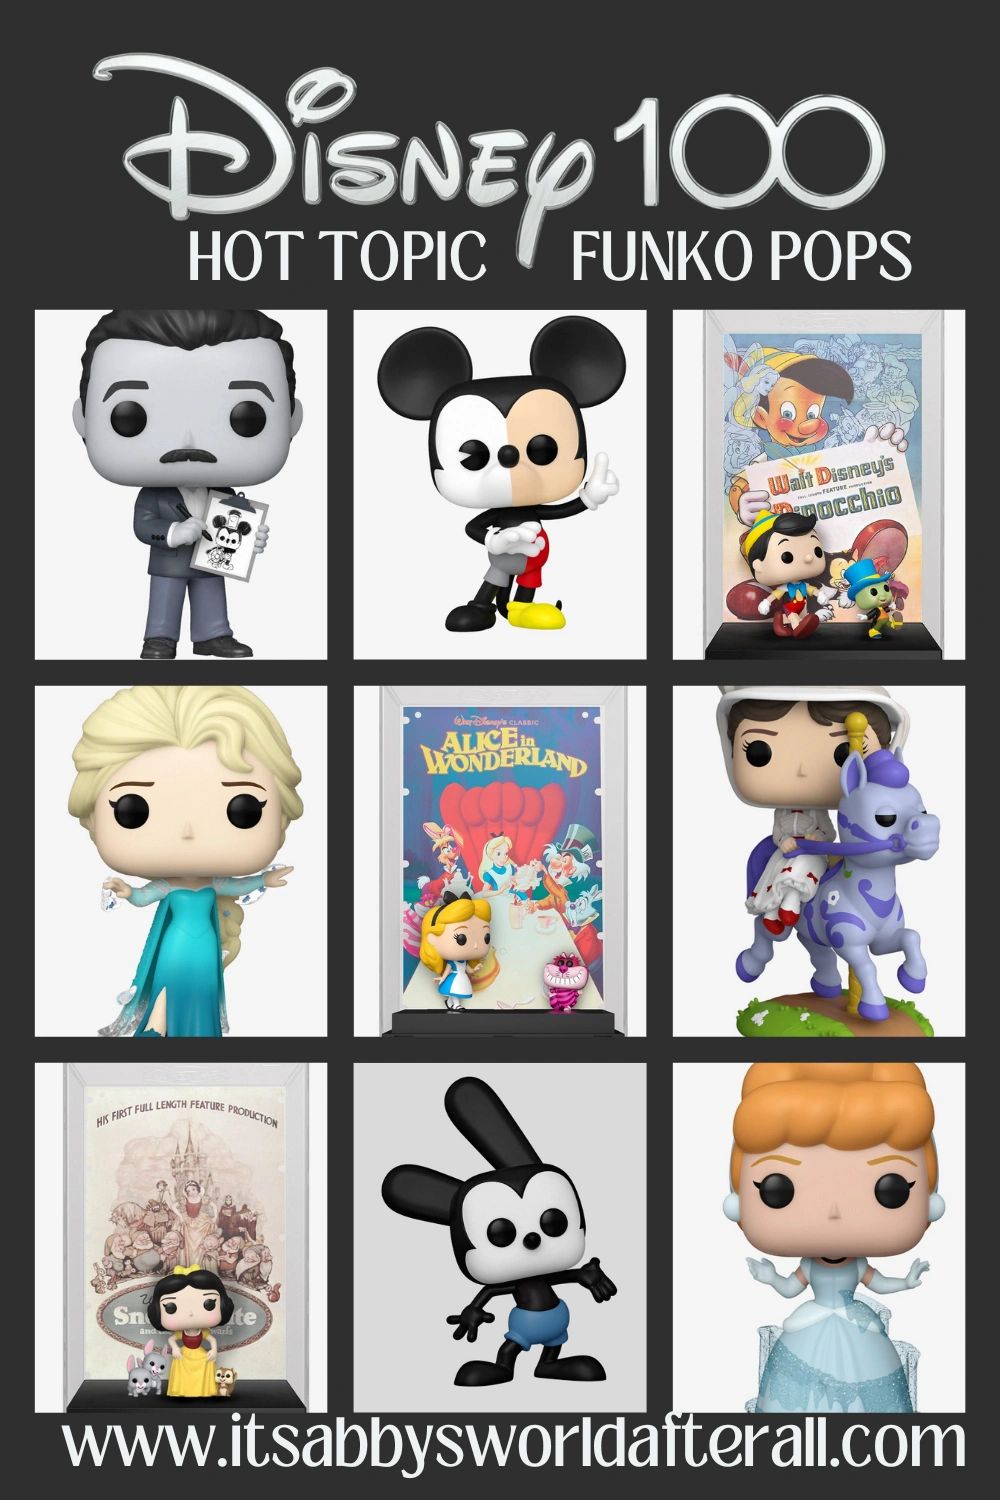  Funko Pop! Moment: Disney 100 - Tiana and Naveen